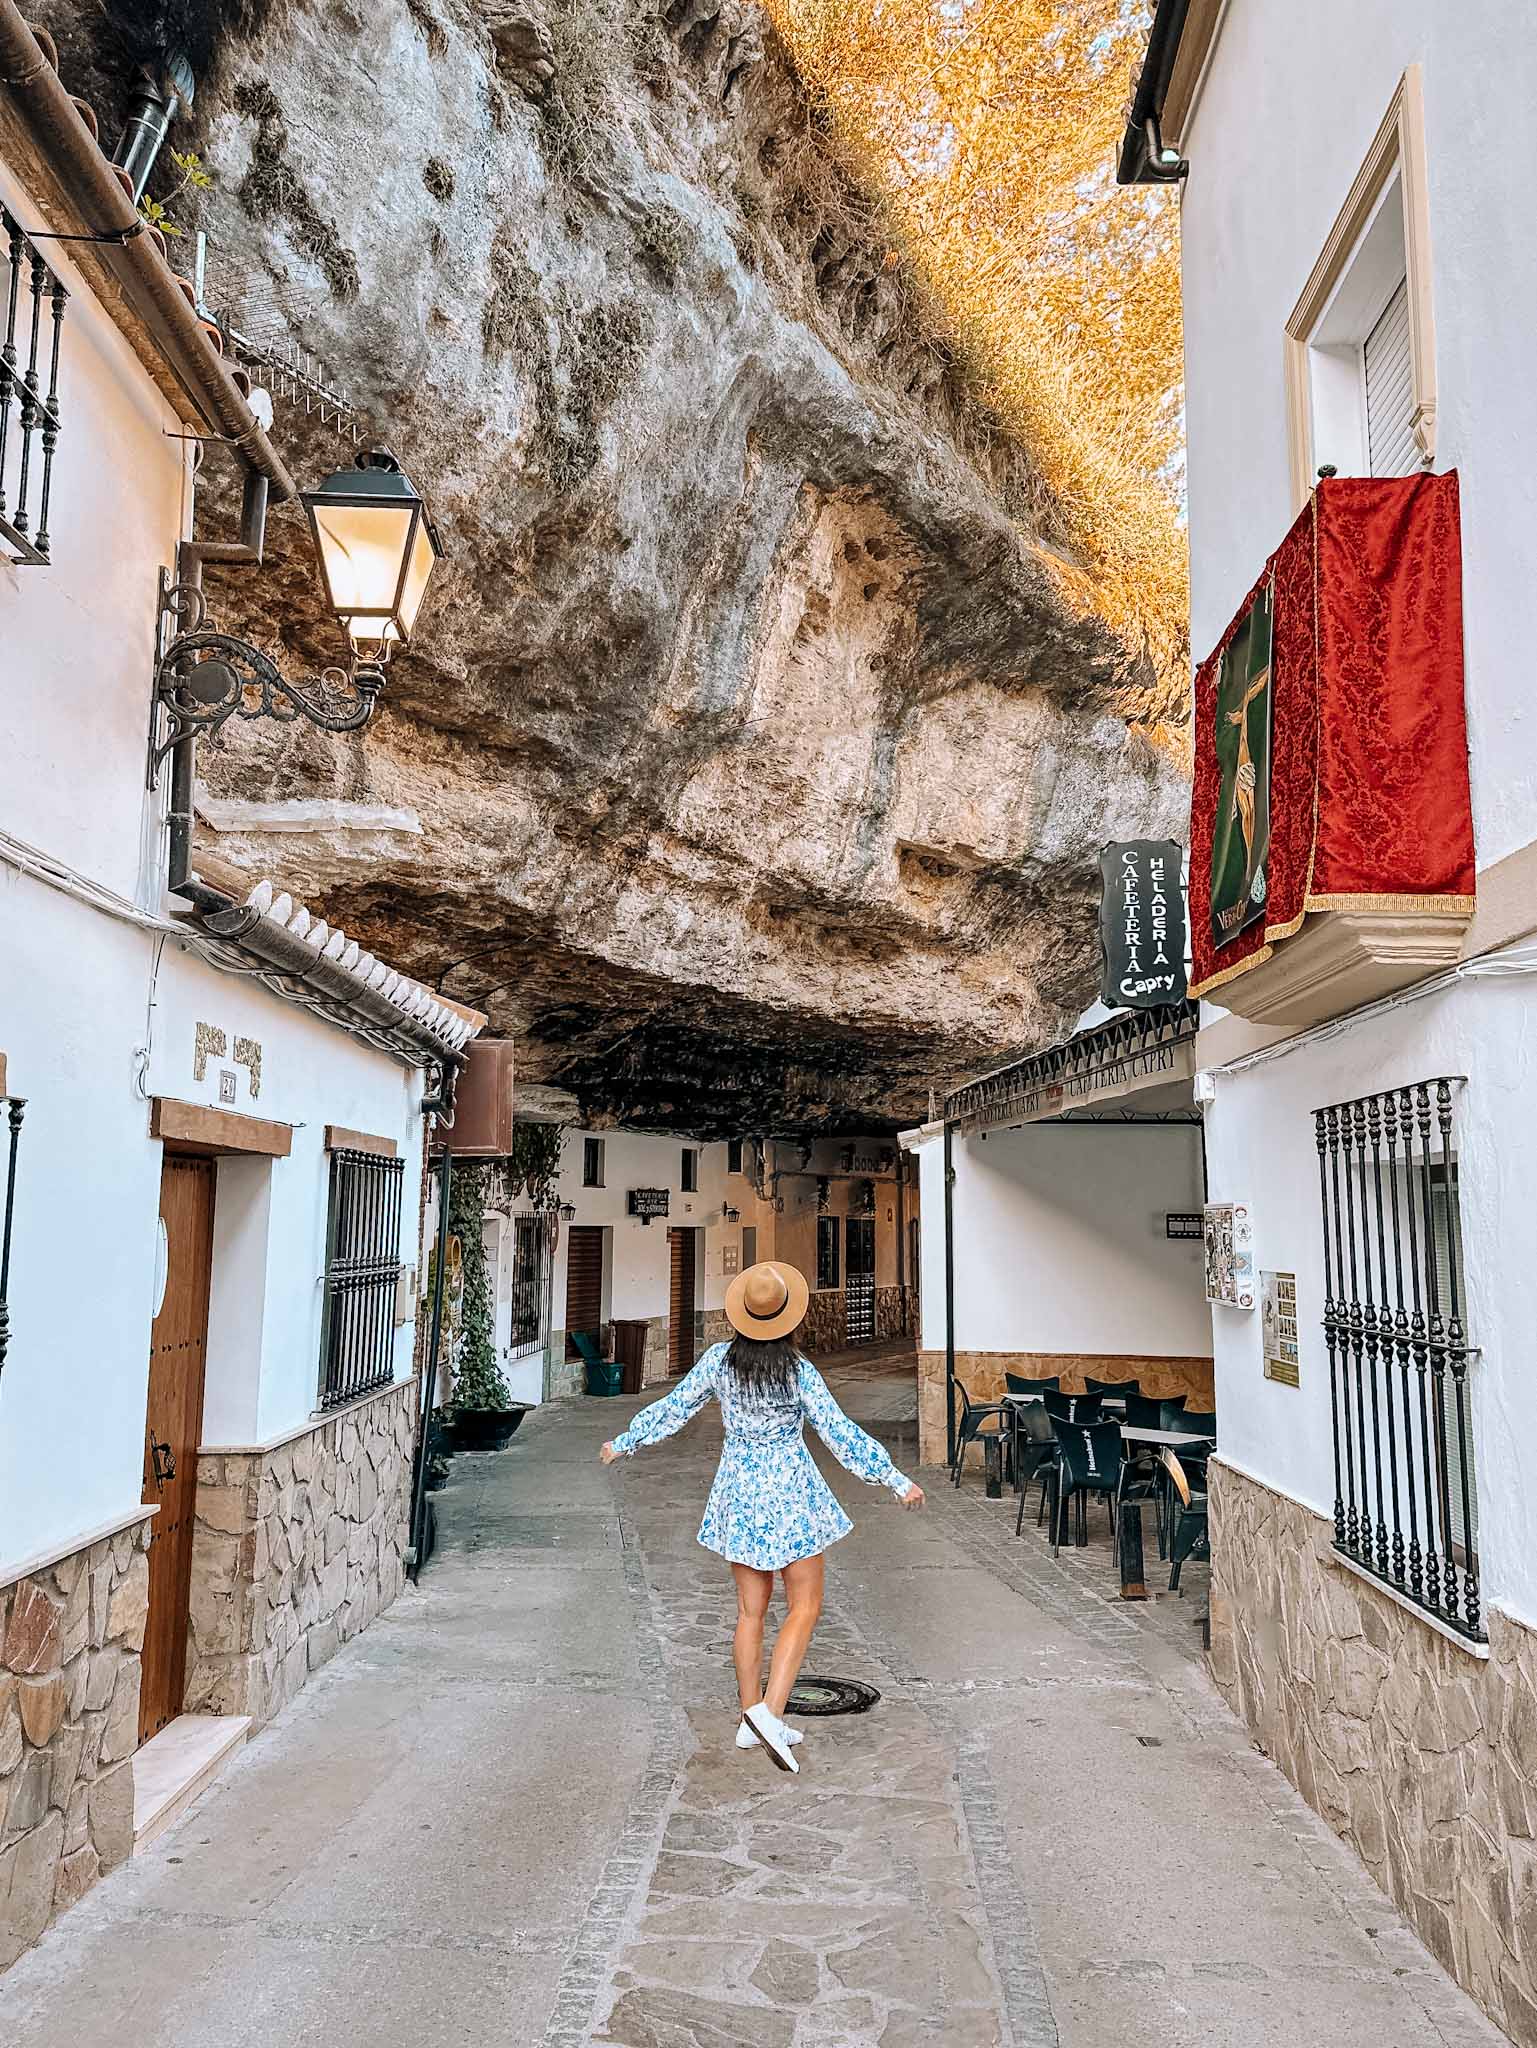 Setenil de las Bodegas Instagram spots - best photo places of the most beautiful and unique spots in the Andalusian village